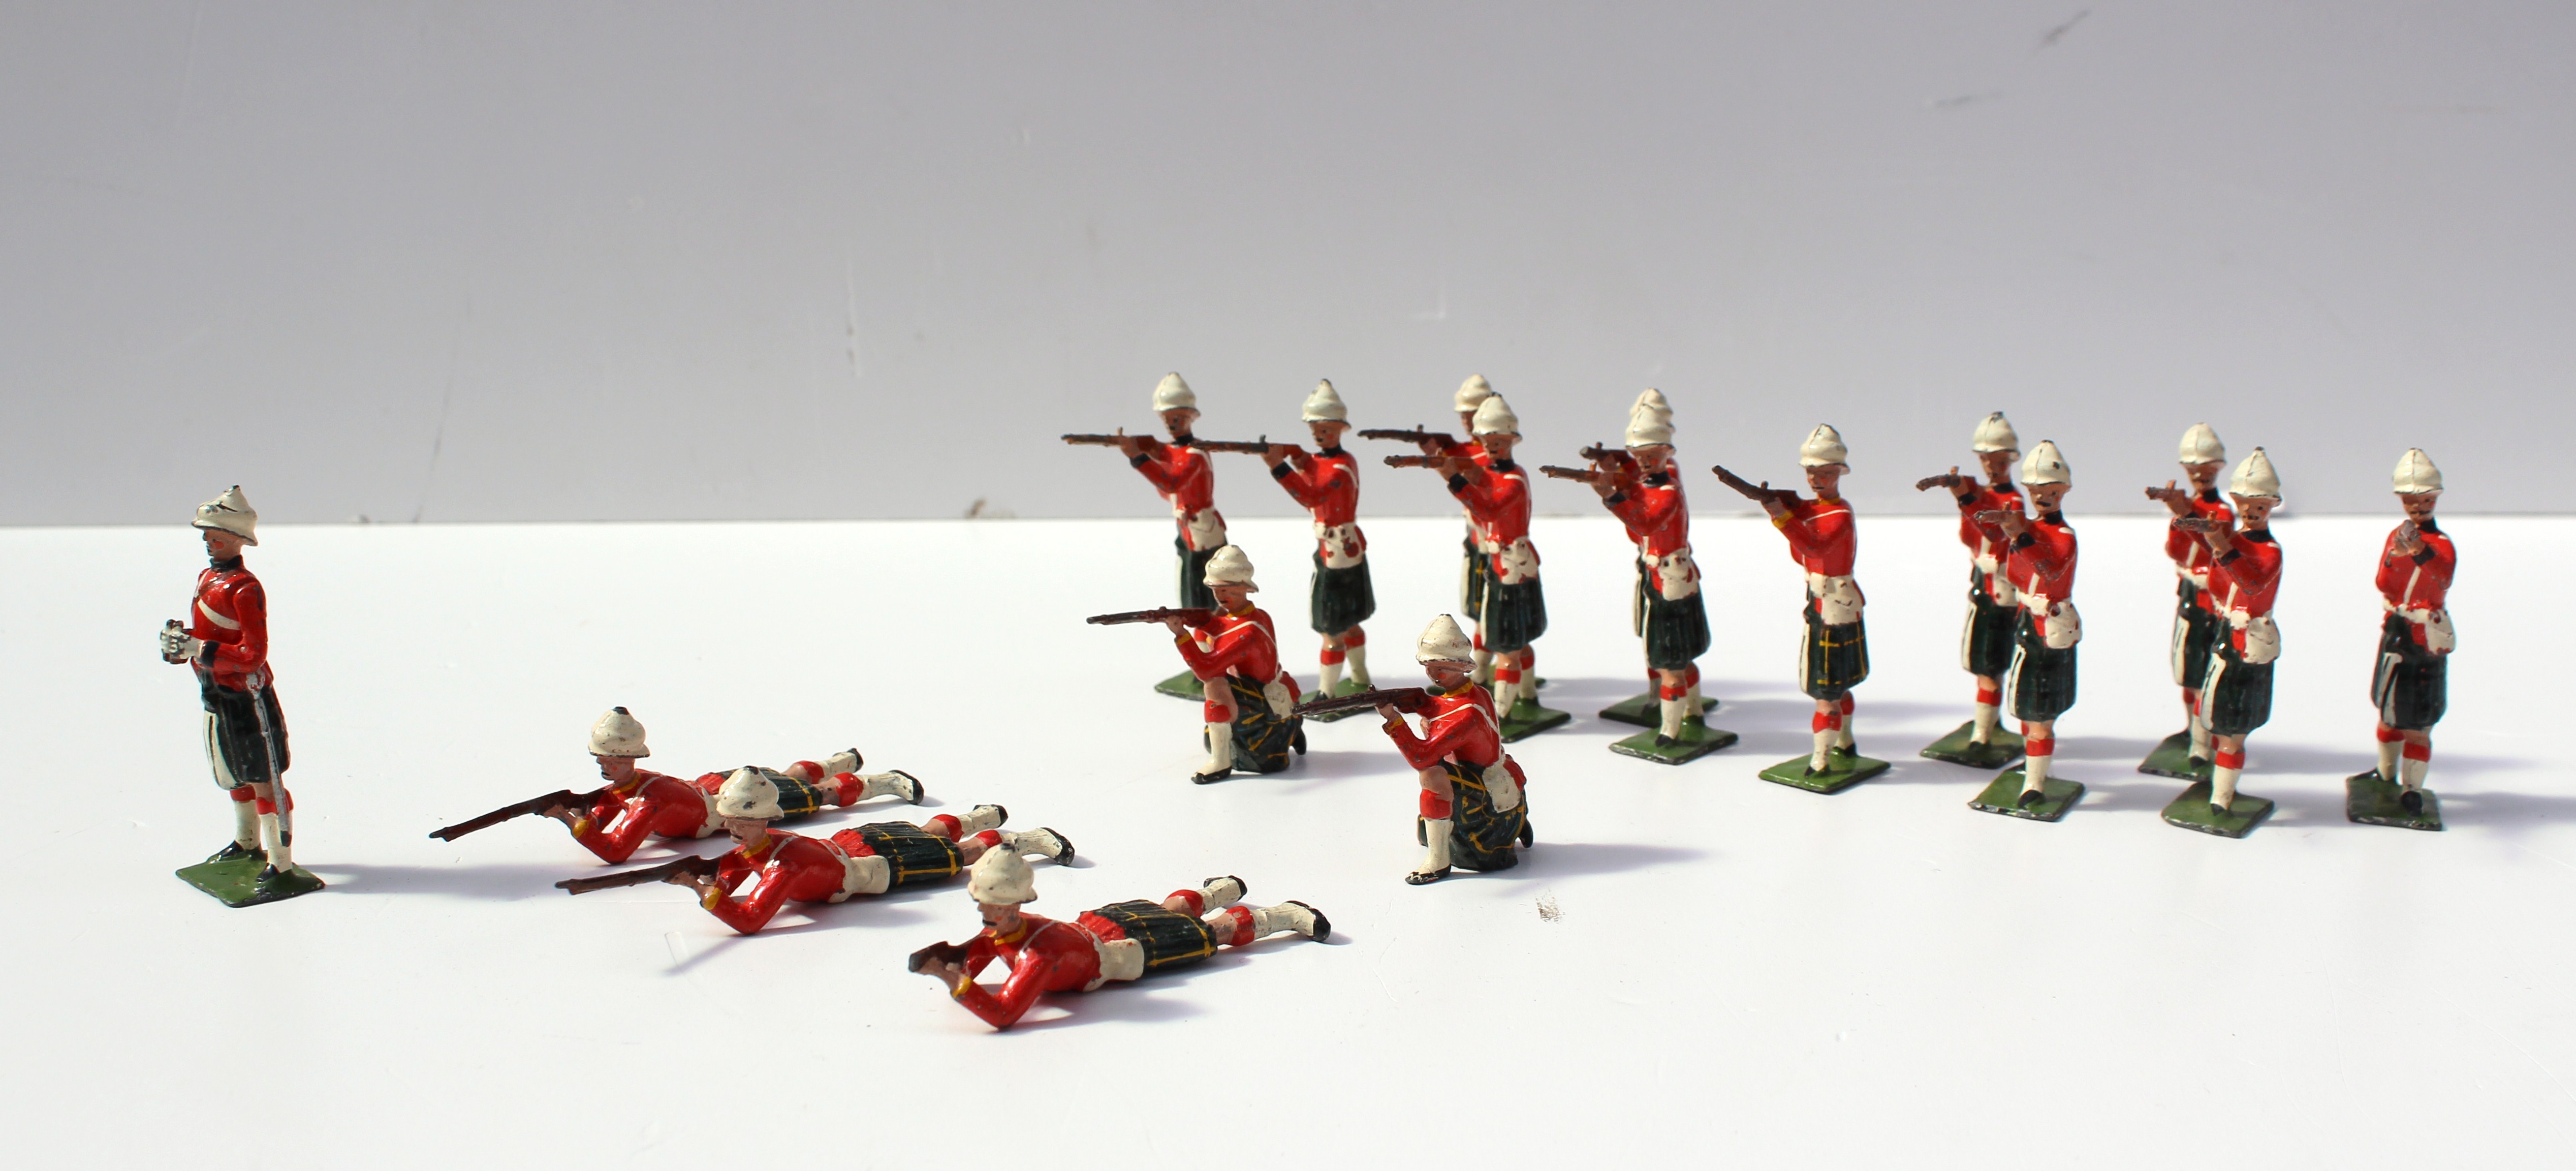 Britains soldiers - The Gordon Highlanders - eighteen figures, standing,